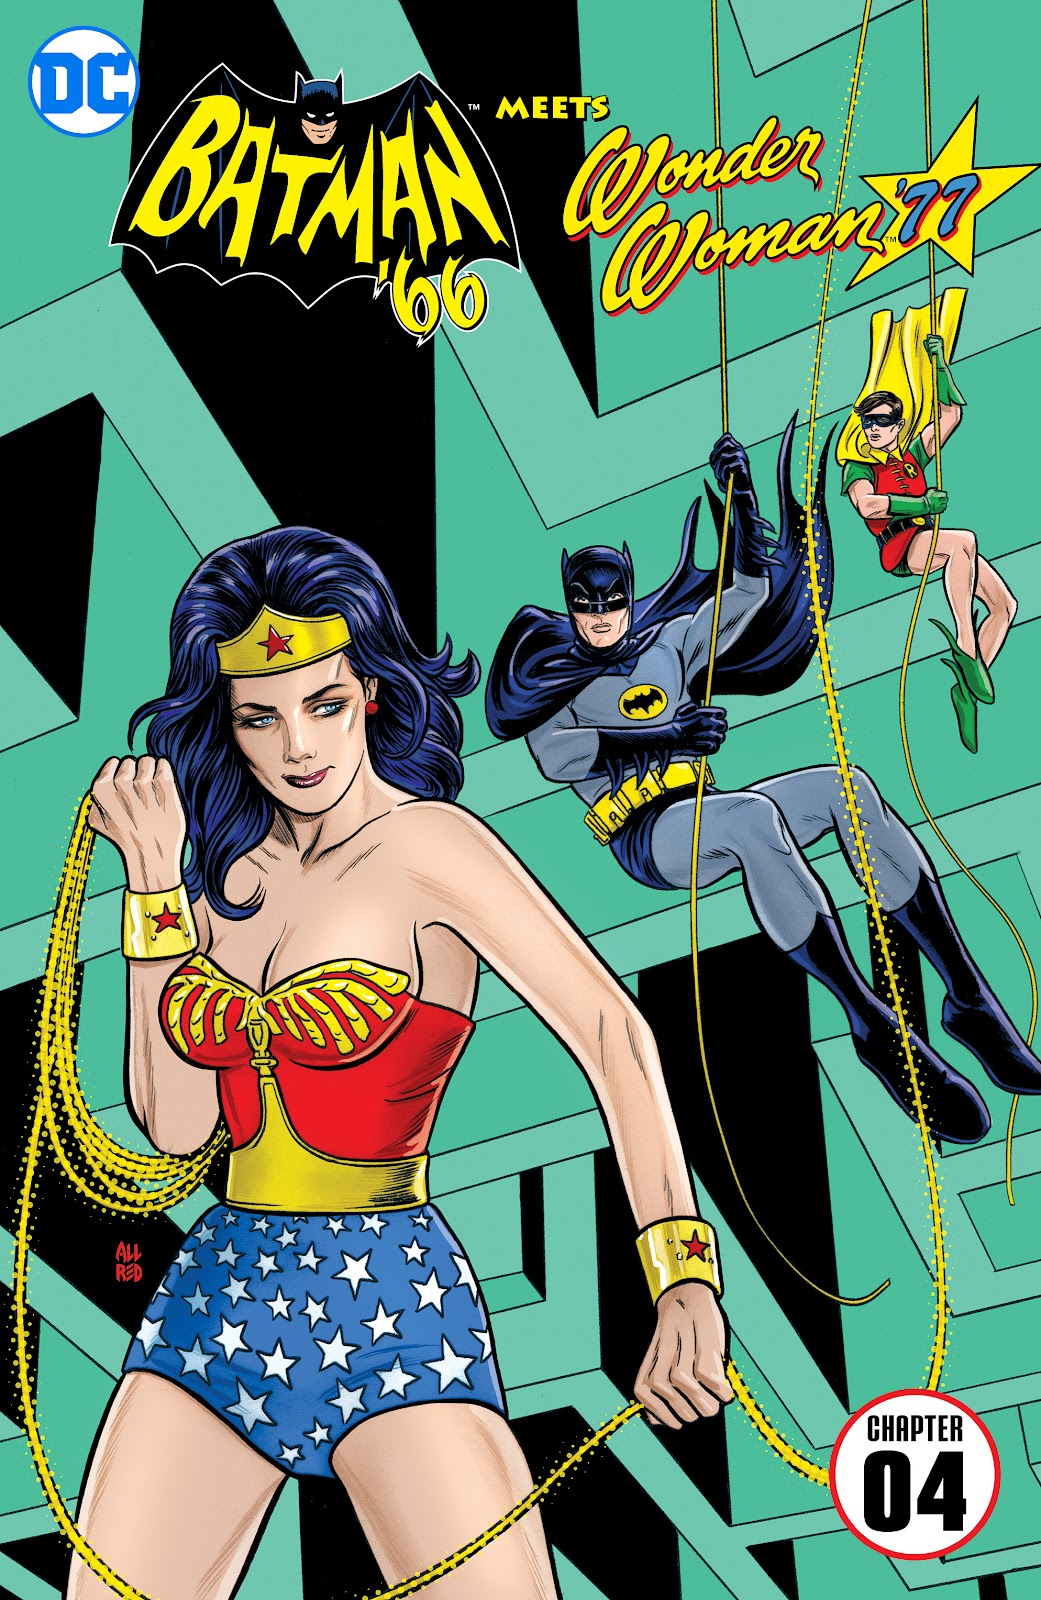 Batman '66 Meets Wonder Woman '77 issue 4 - Page 2